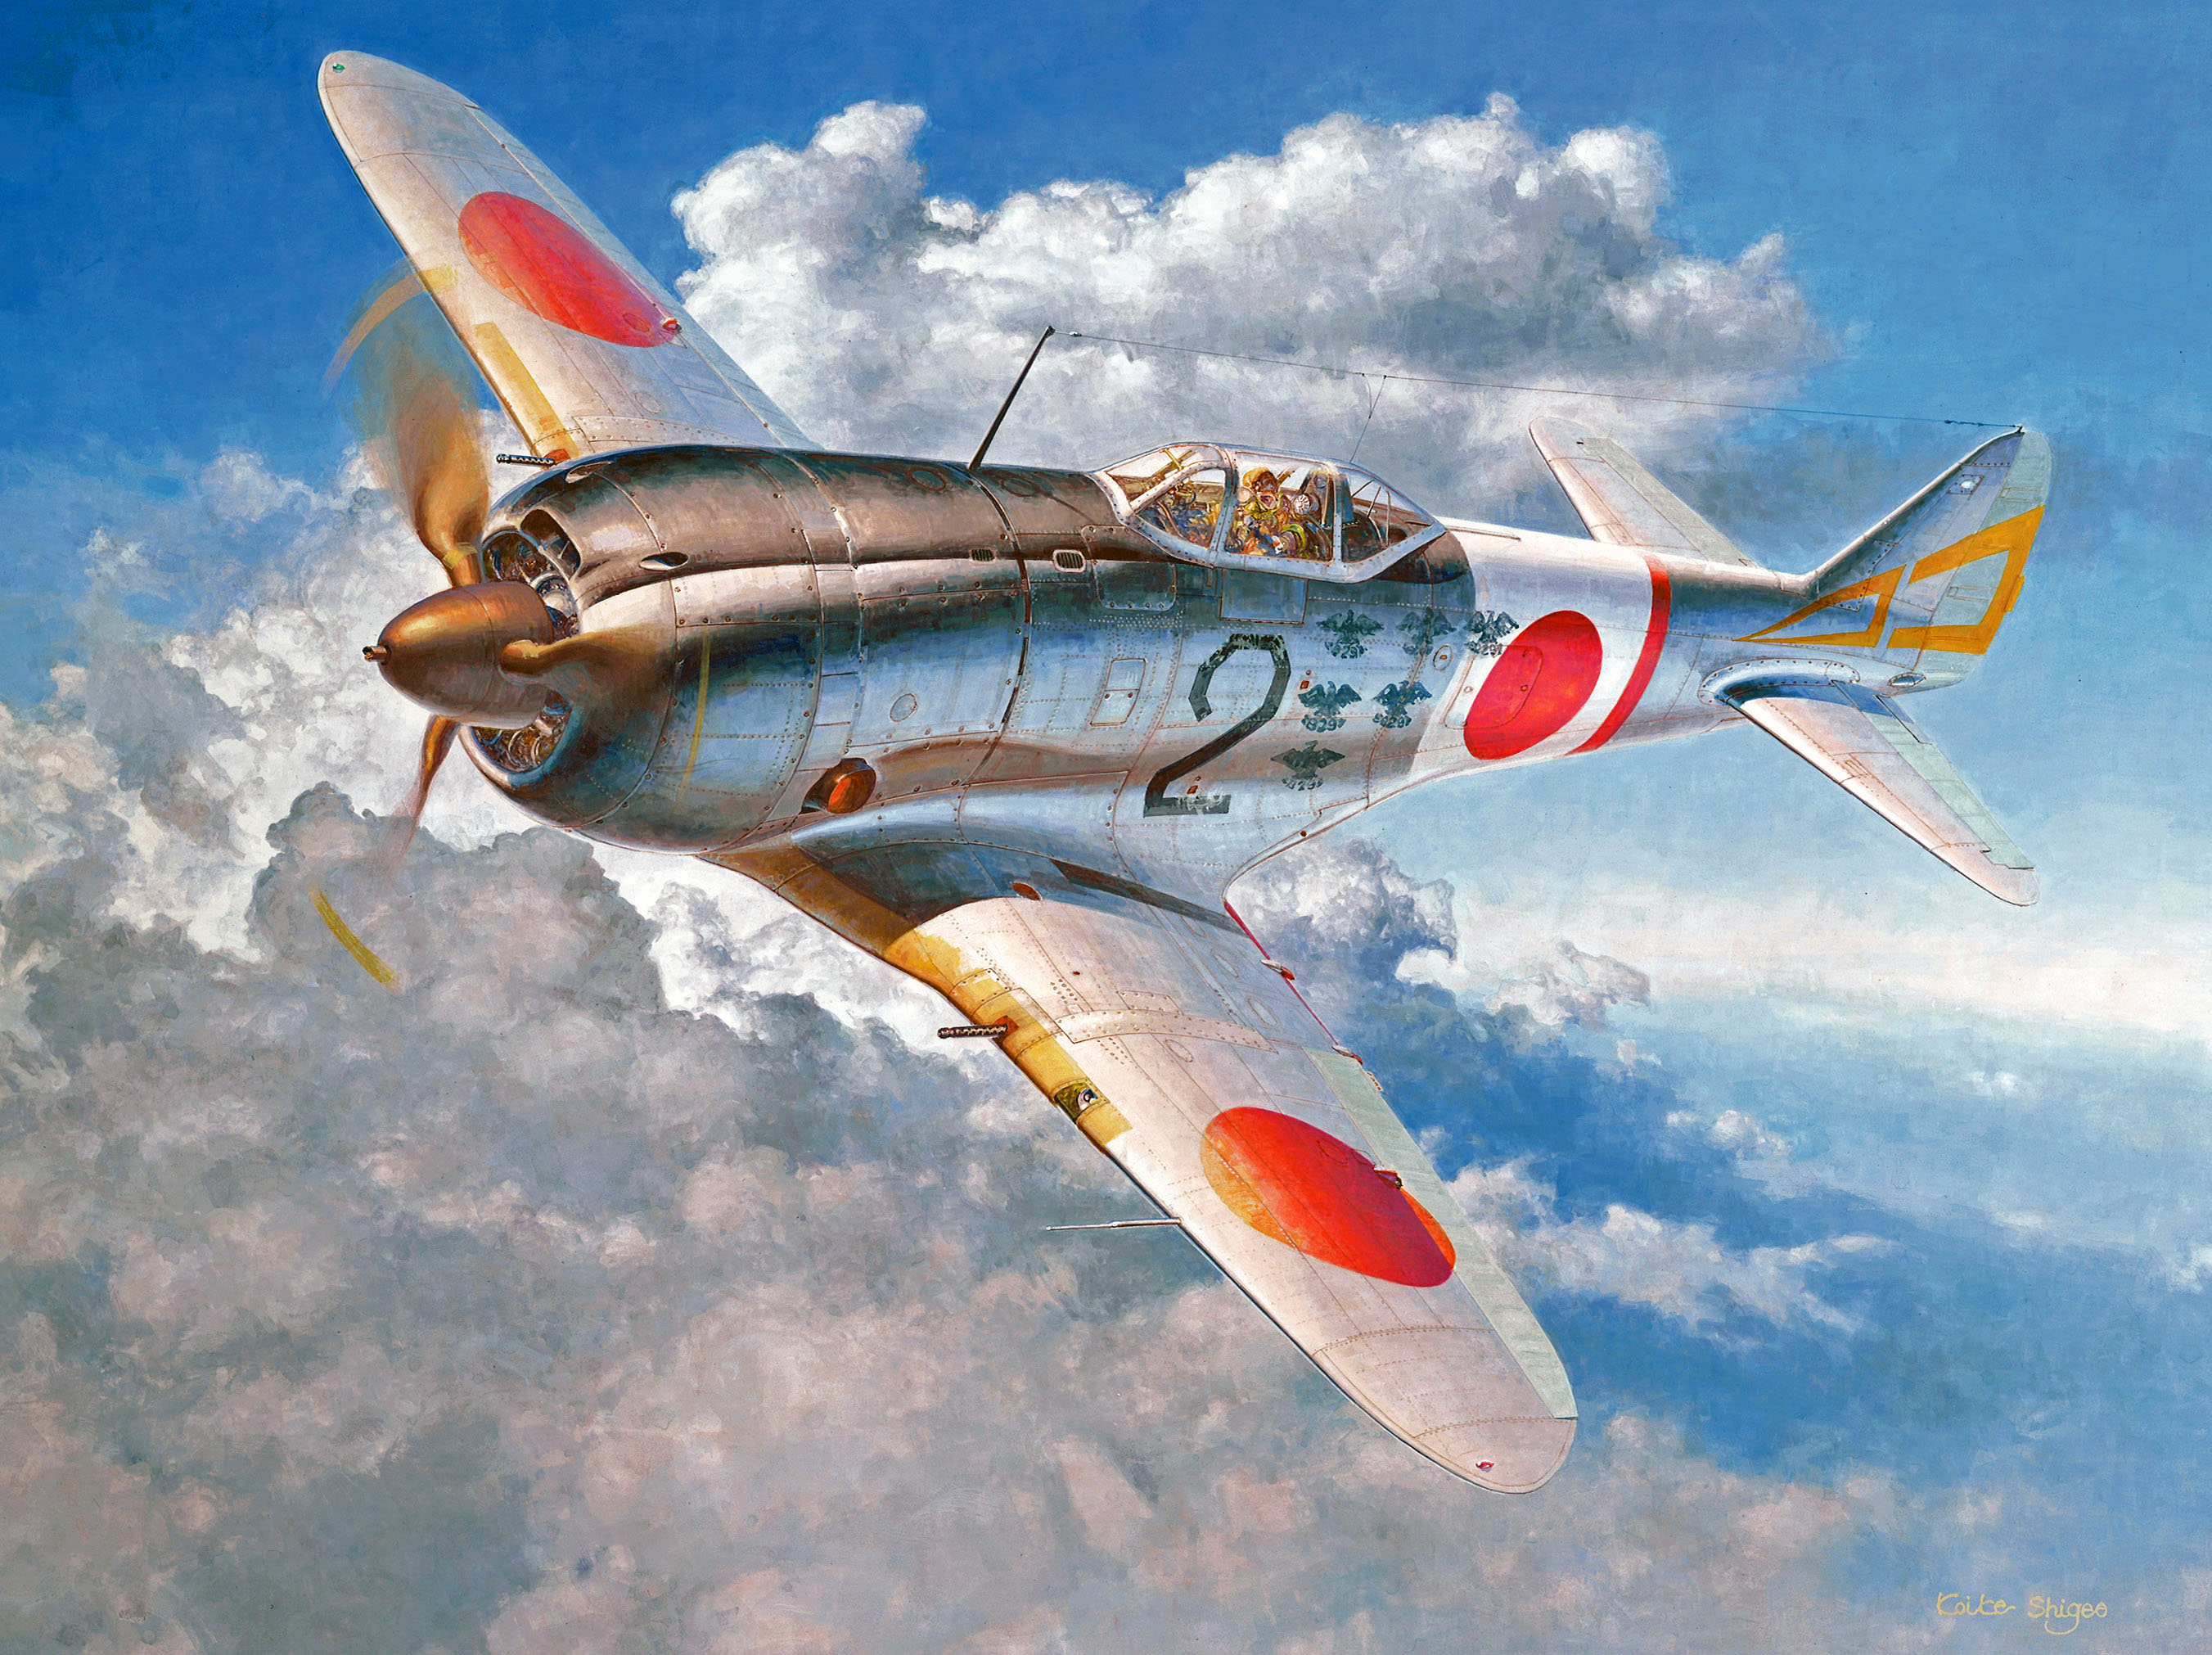 General 2703x2022 world war World War II war military military aircraft aircraft airplane Boxart artwork painting Japan Imperial Japanese Army Air Service combat aircraft Nakajima Ki-44 clouds